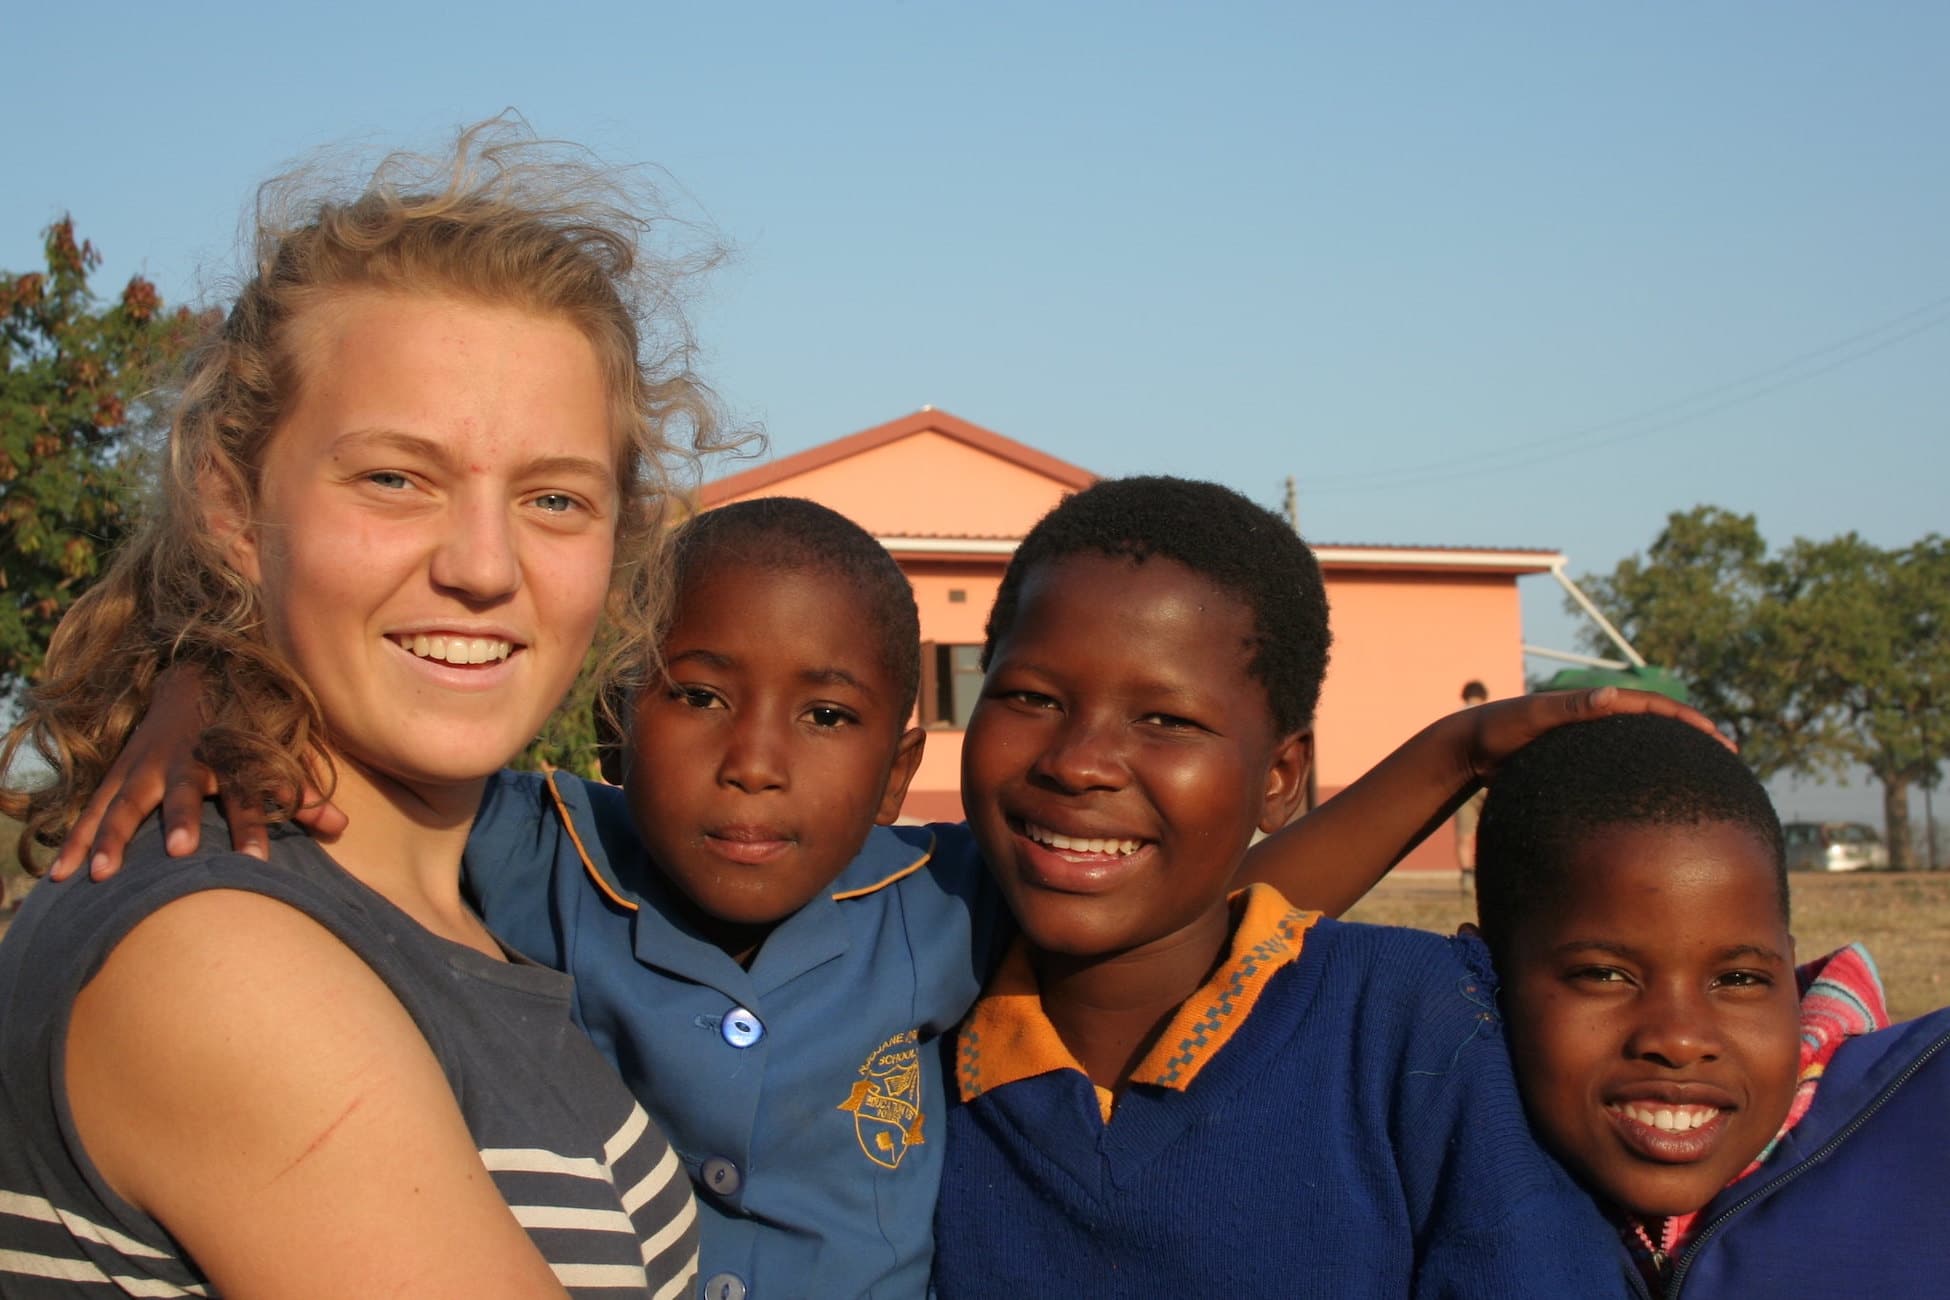 Volunteering in Africa